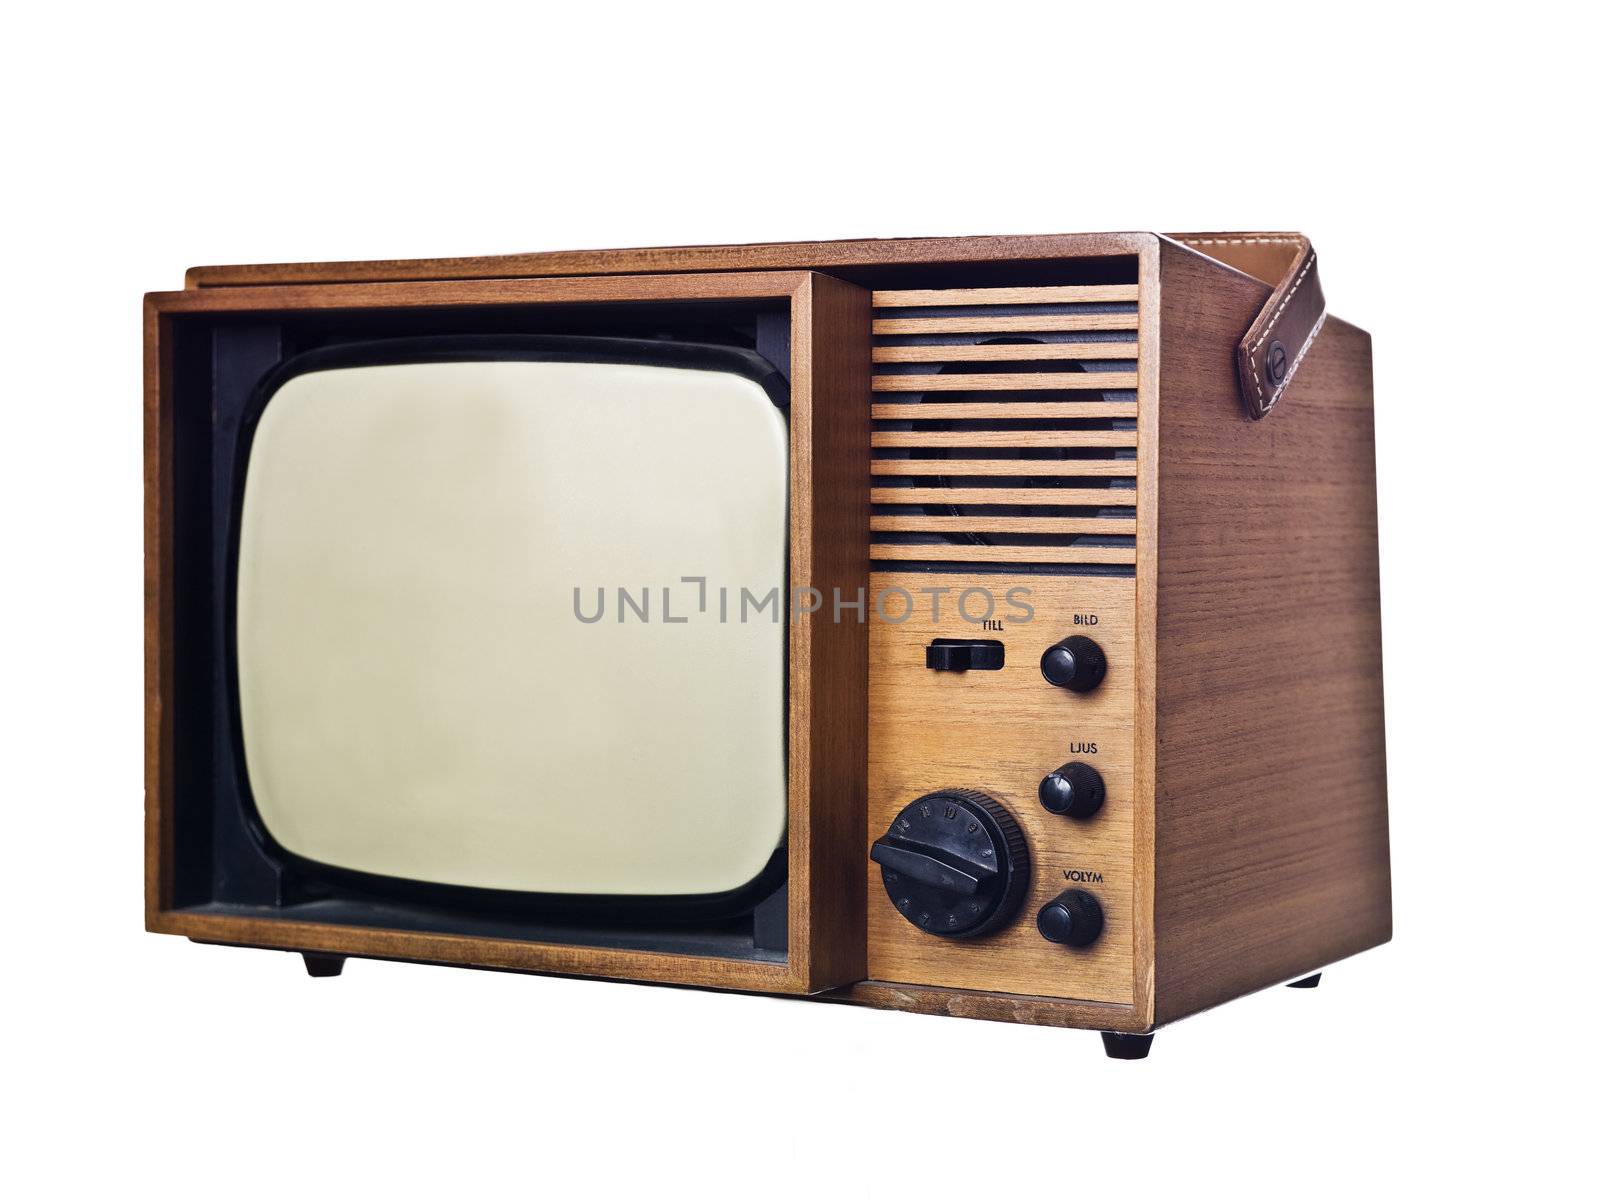 Vintage television by gemenacom